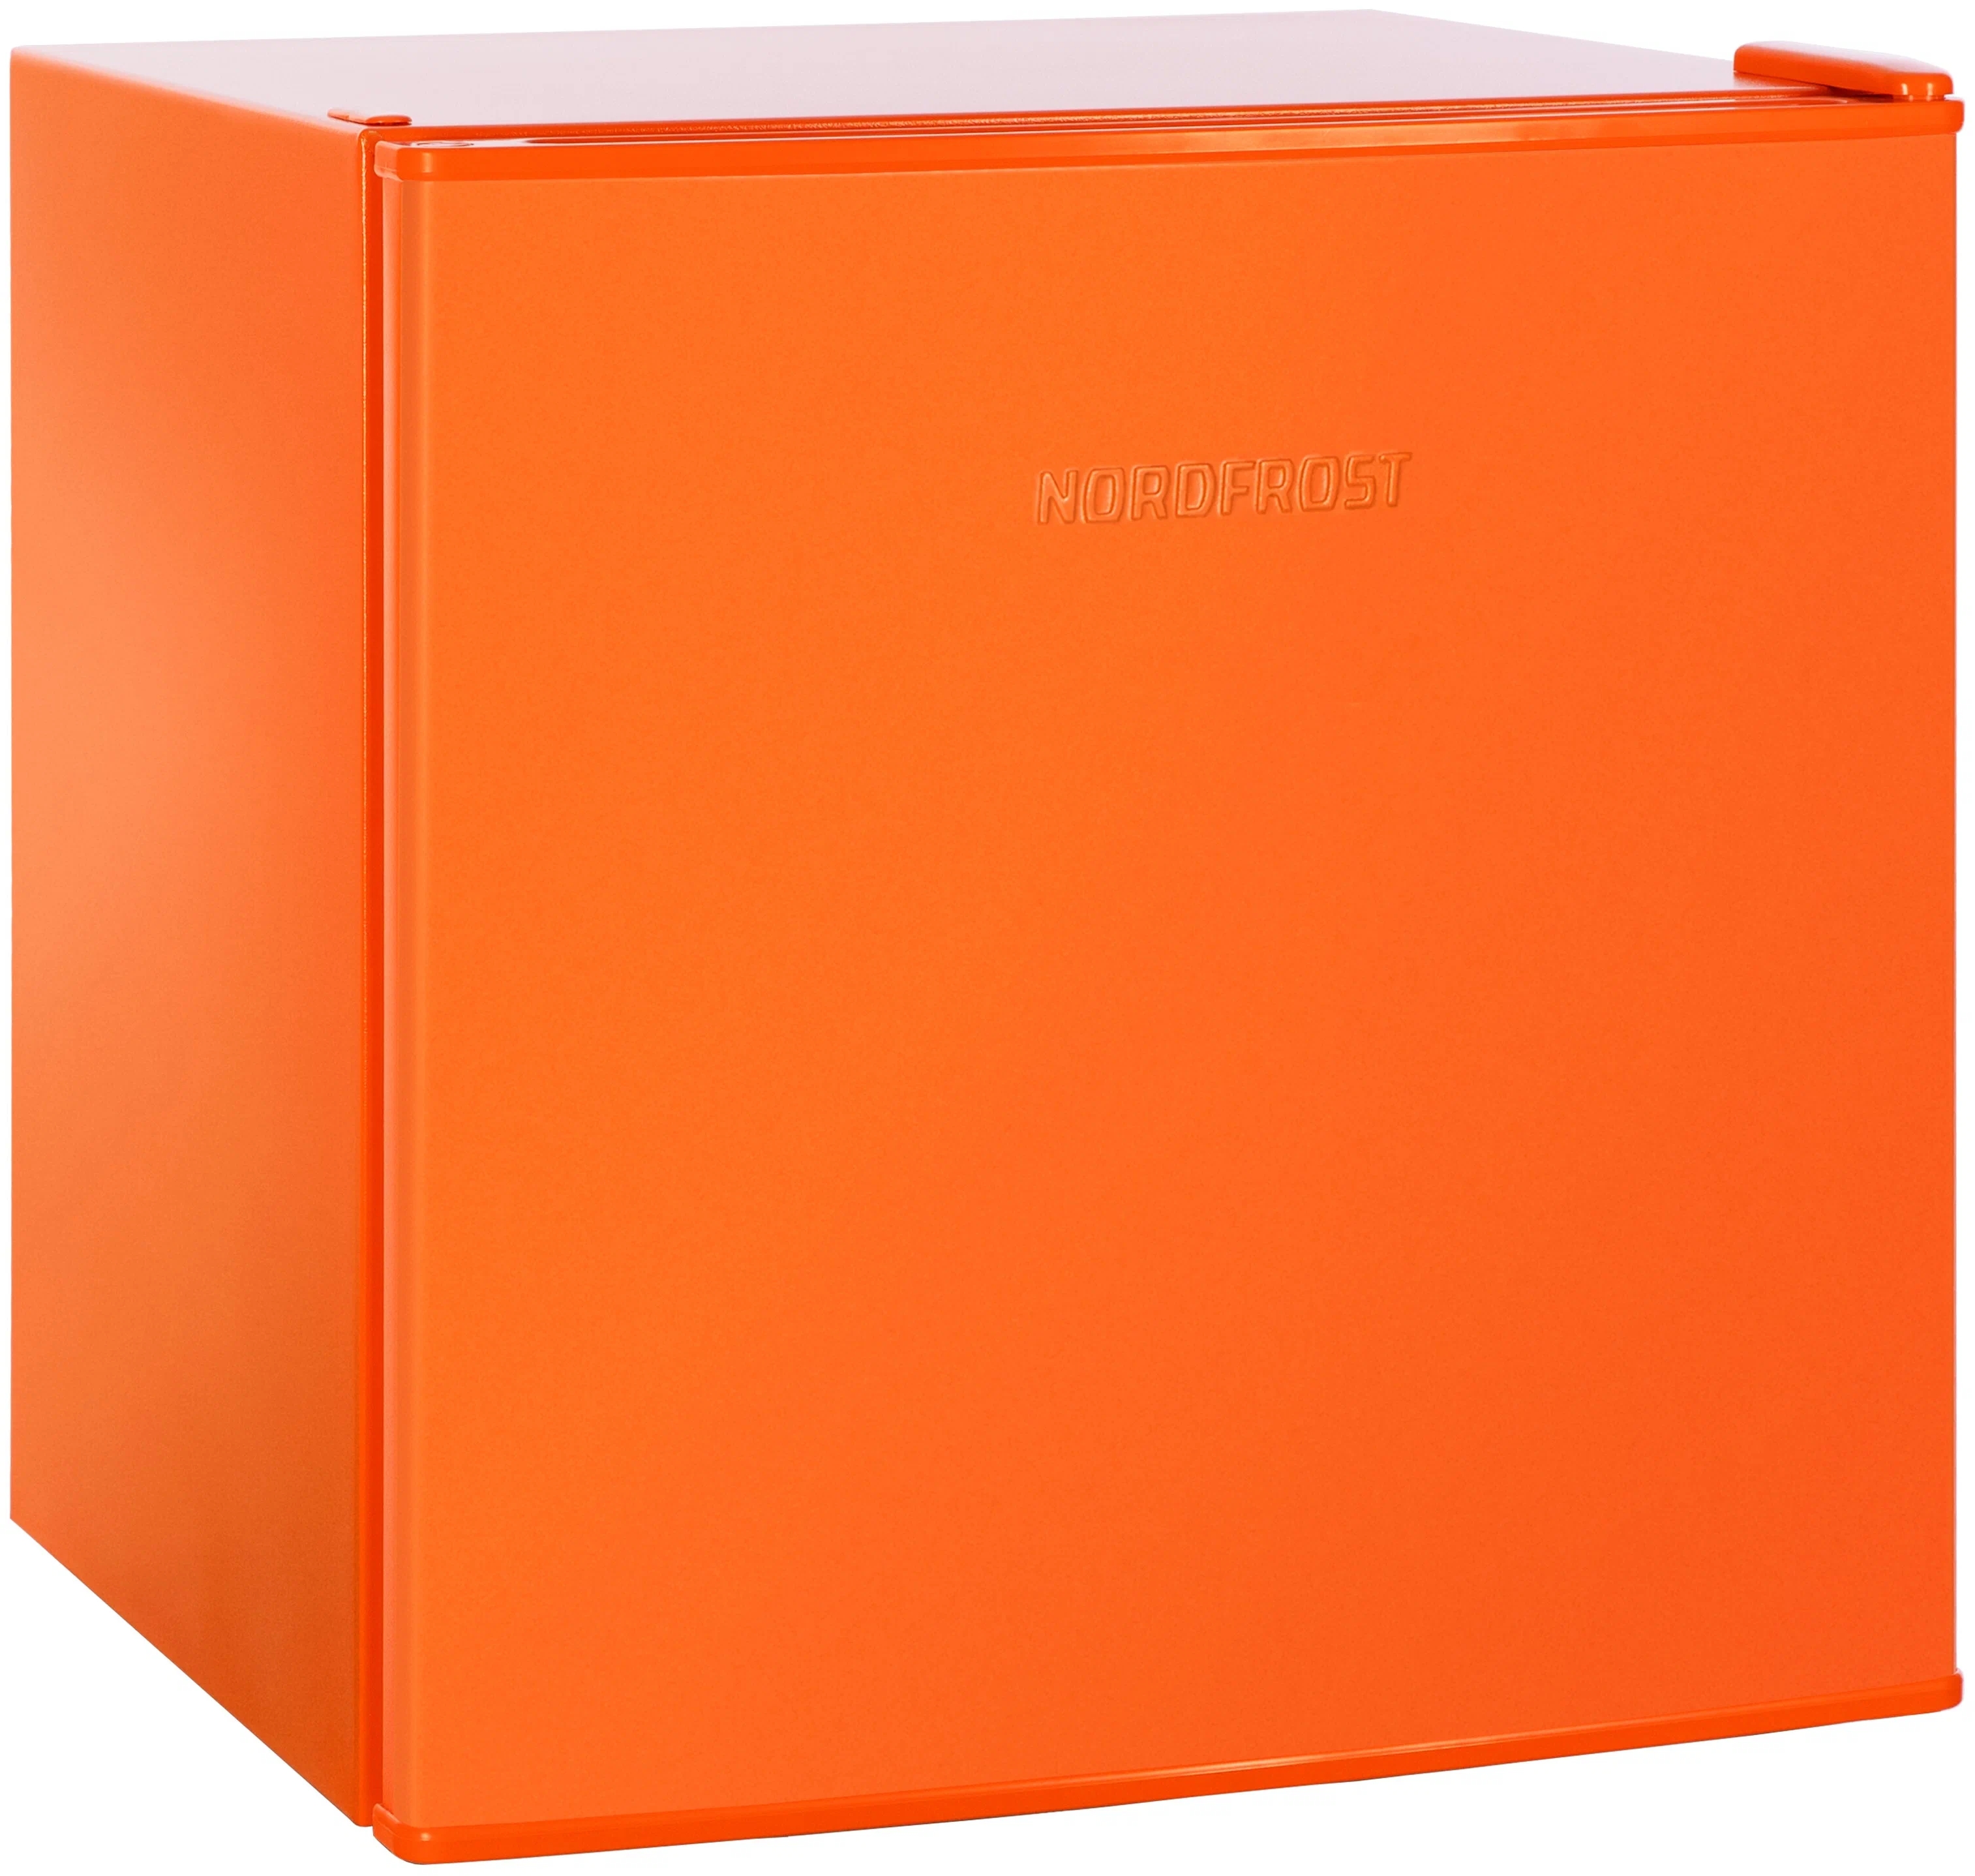 Холодильник компактный Nordfrost NR 506 Or оранжевый